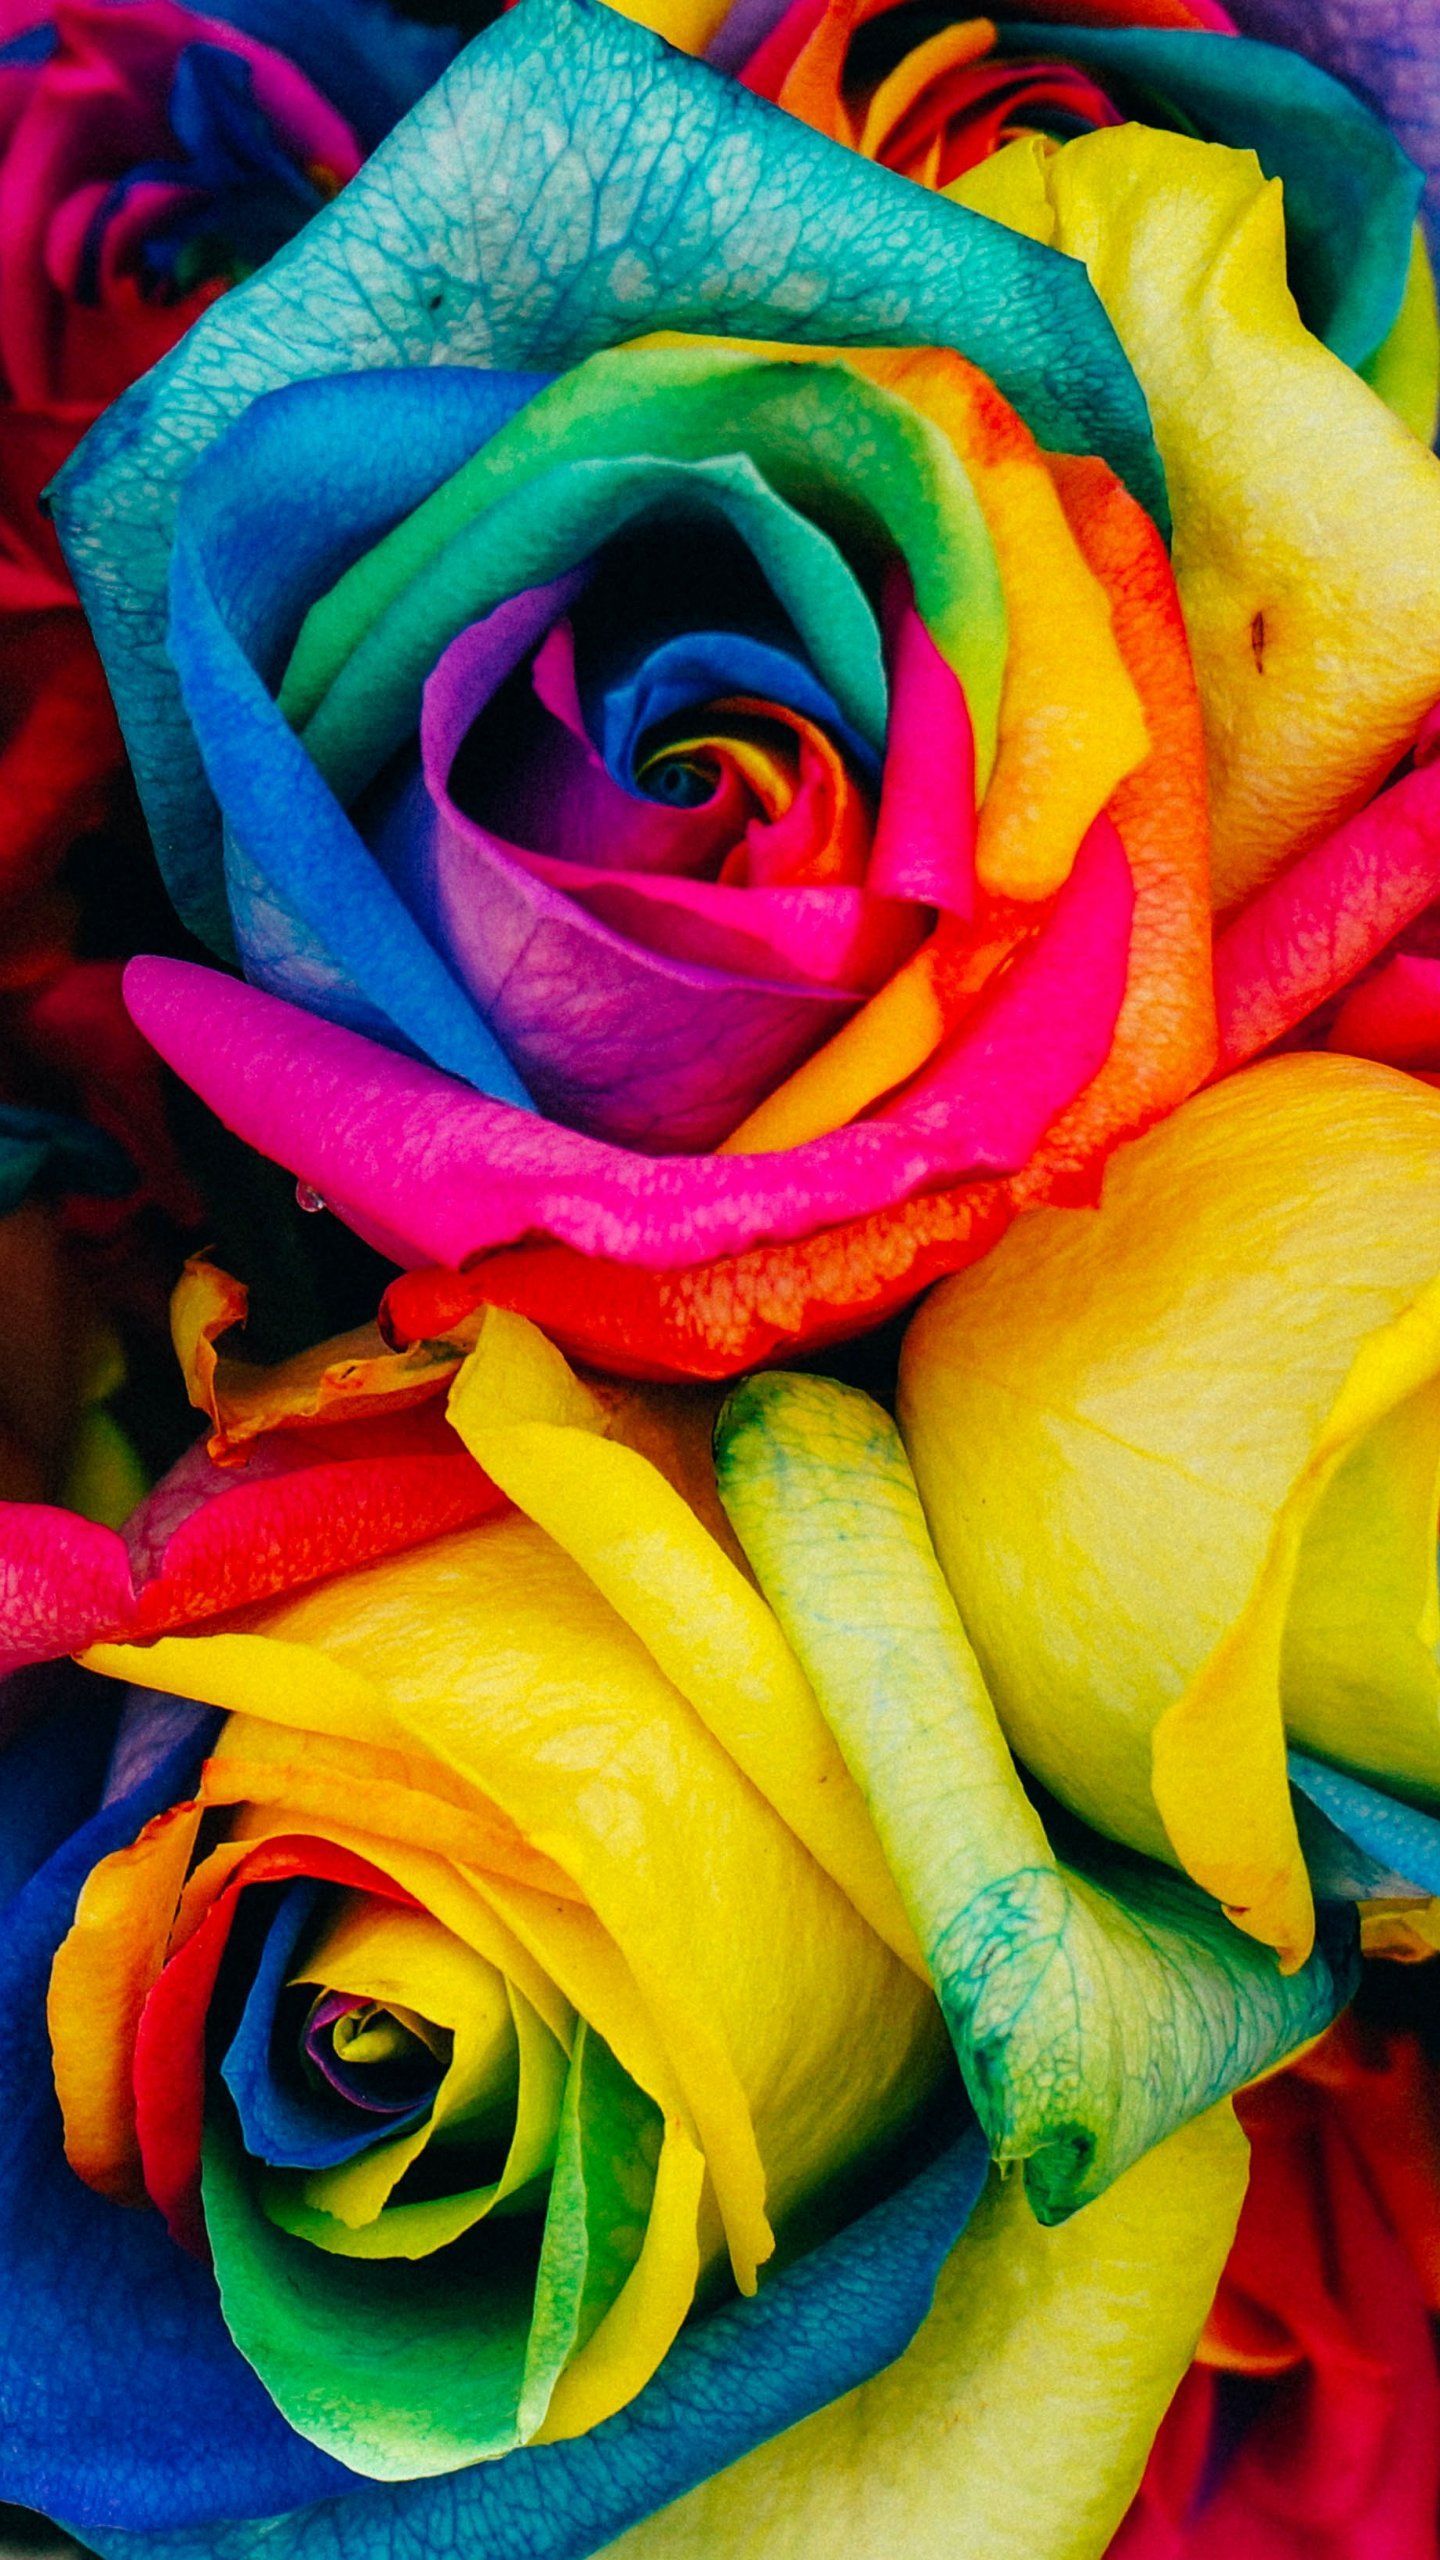 Rainbow Roses Wallpaper, Android & Desktop Background. Rainbow wallpaper iphone, Rainbow roses, Rainbow wallpaper